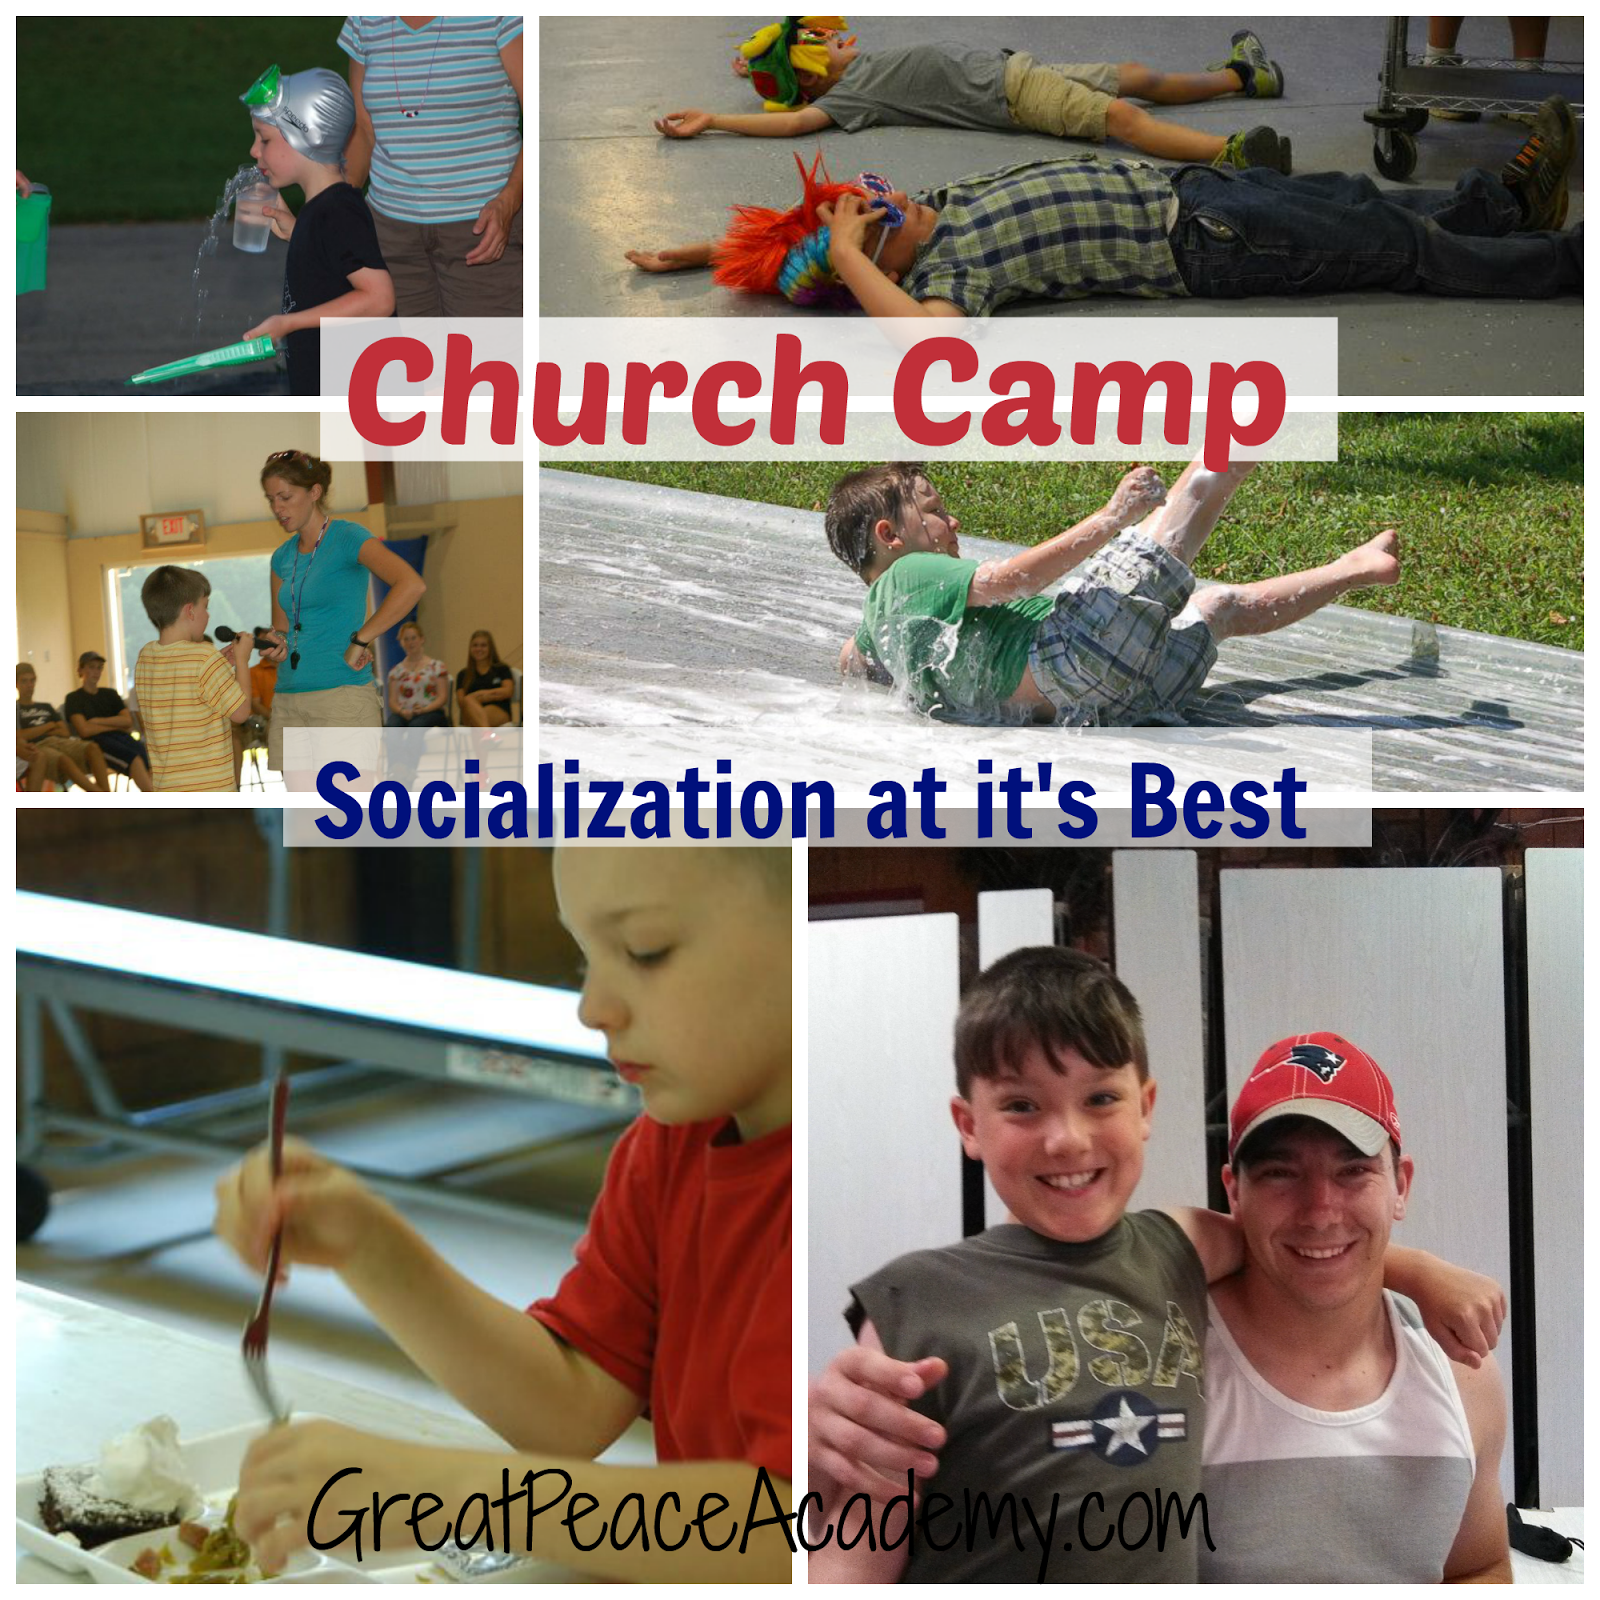 Church camp for Socialization